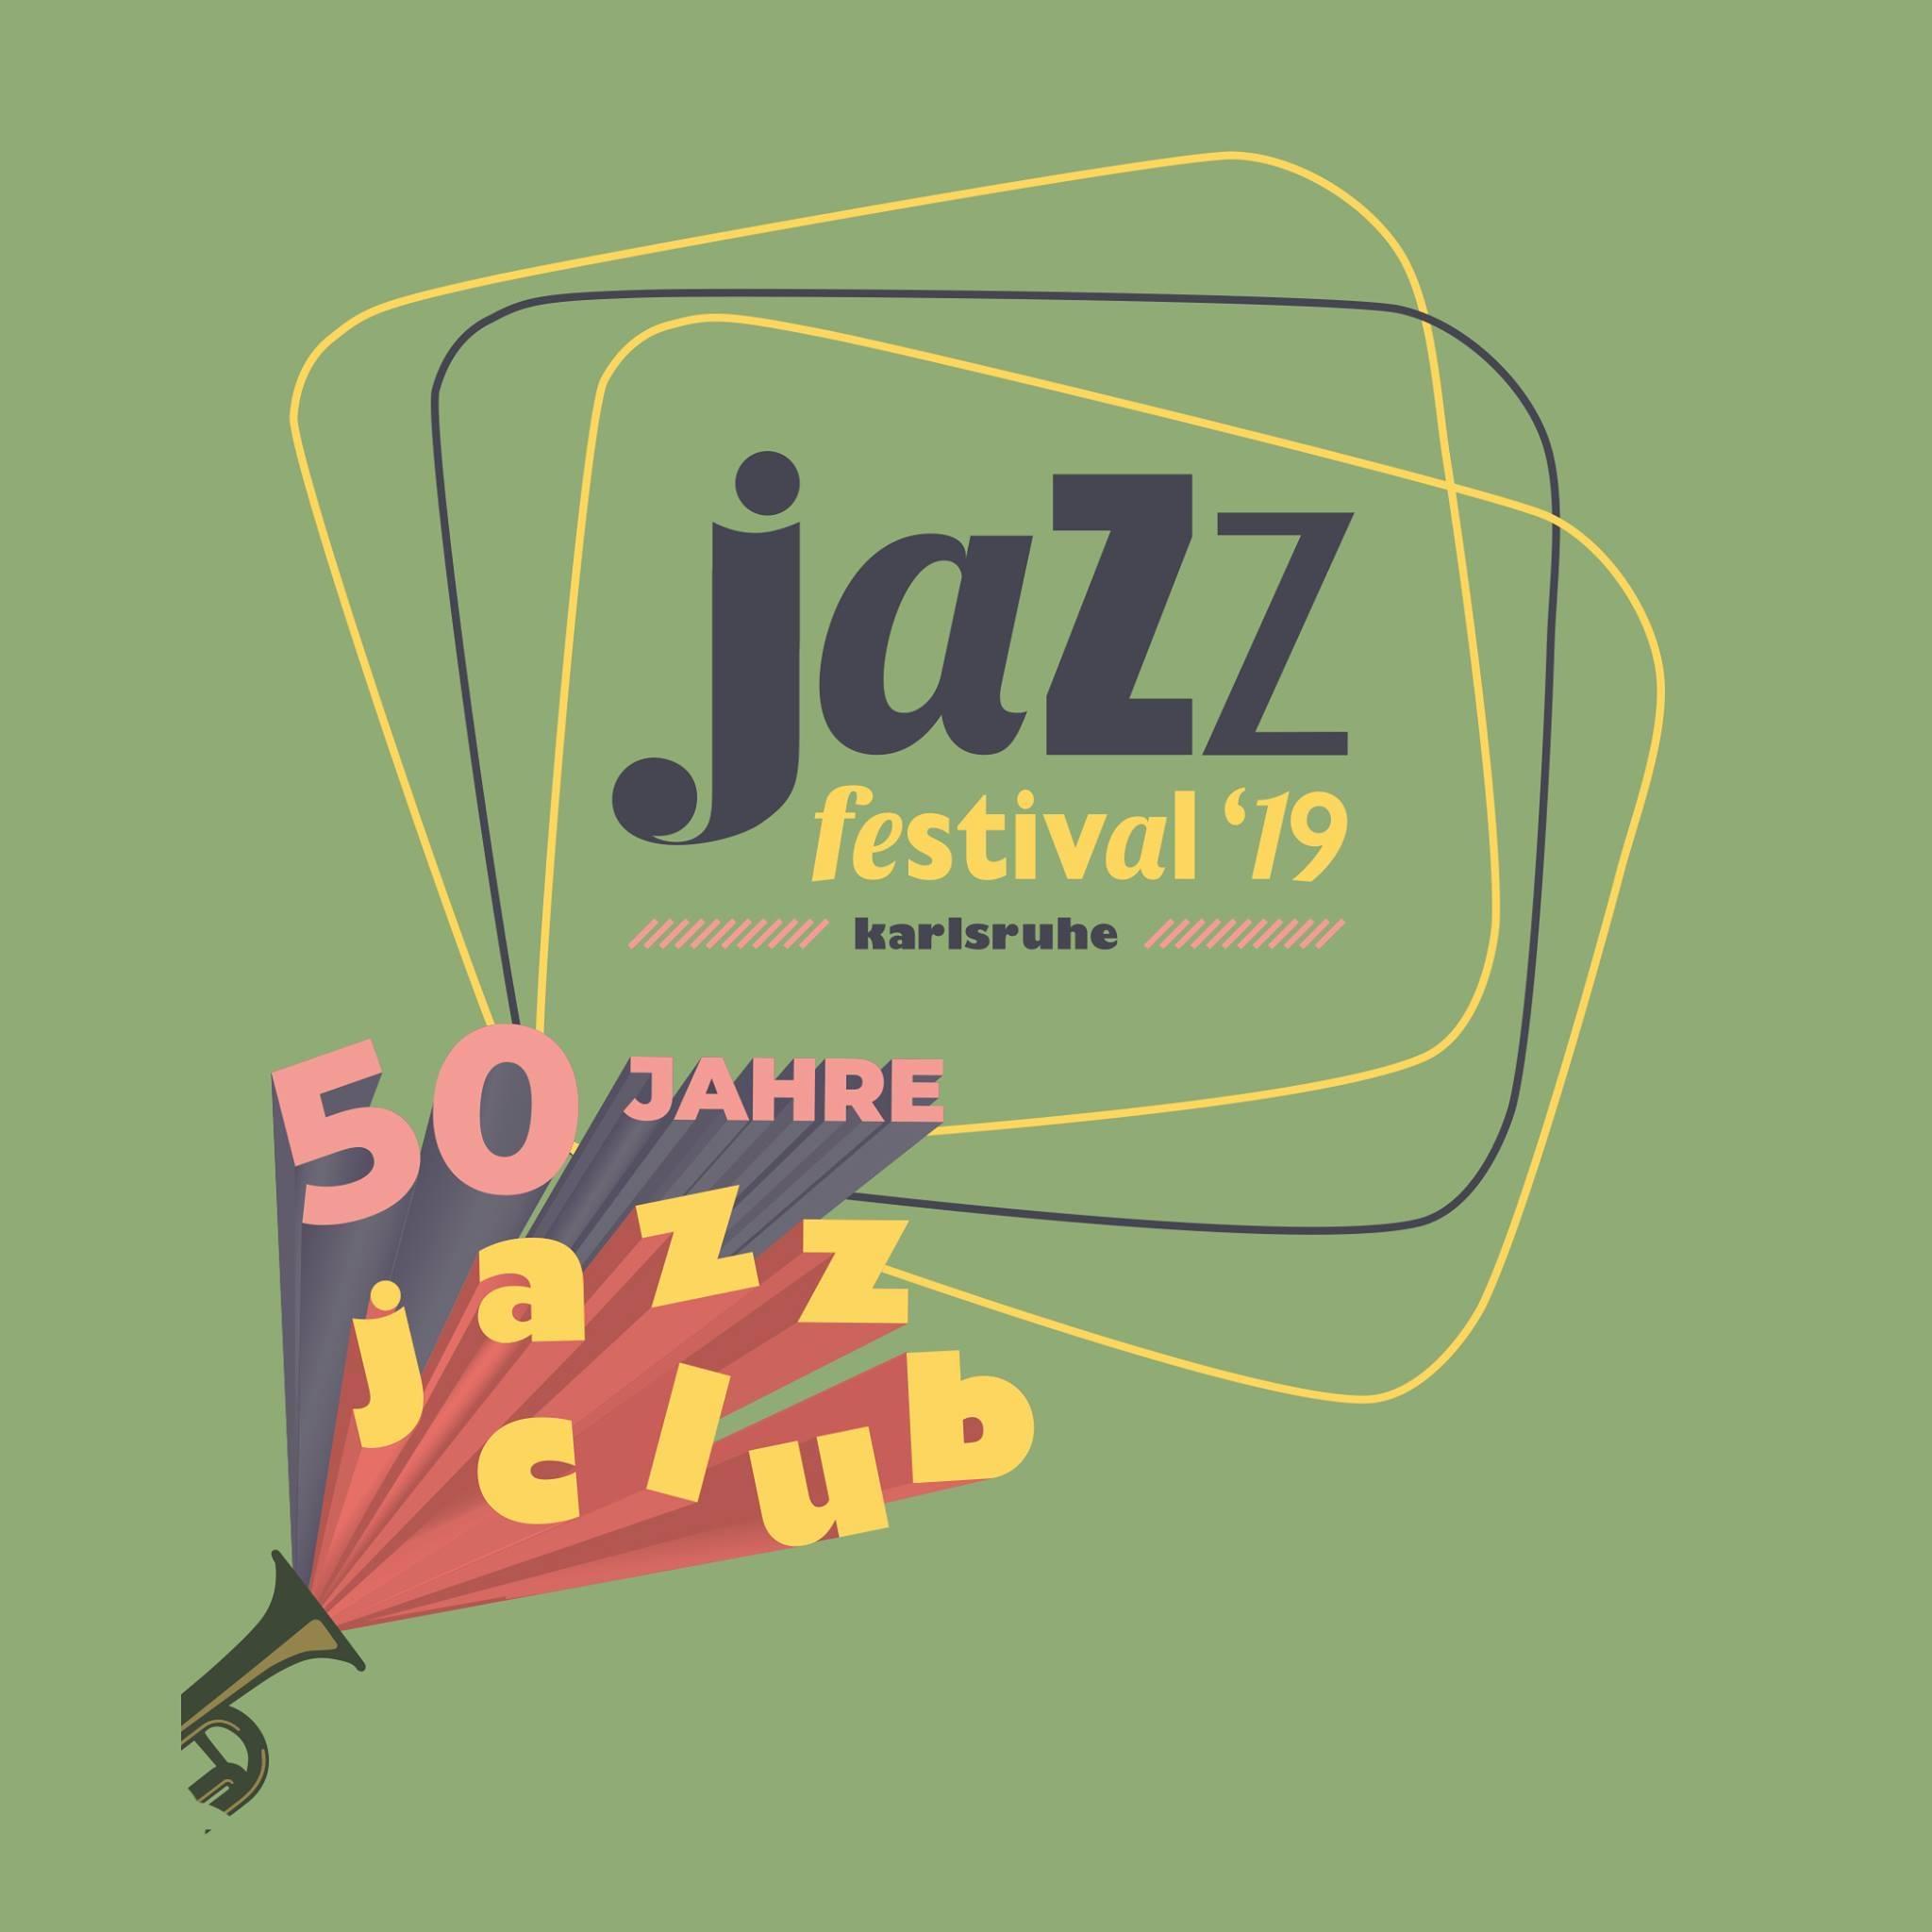 Jazzfestival Karlsruhe